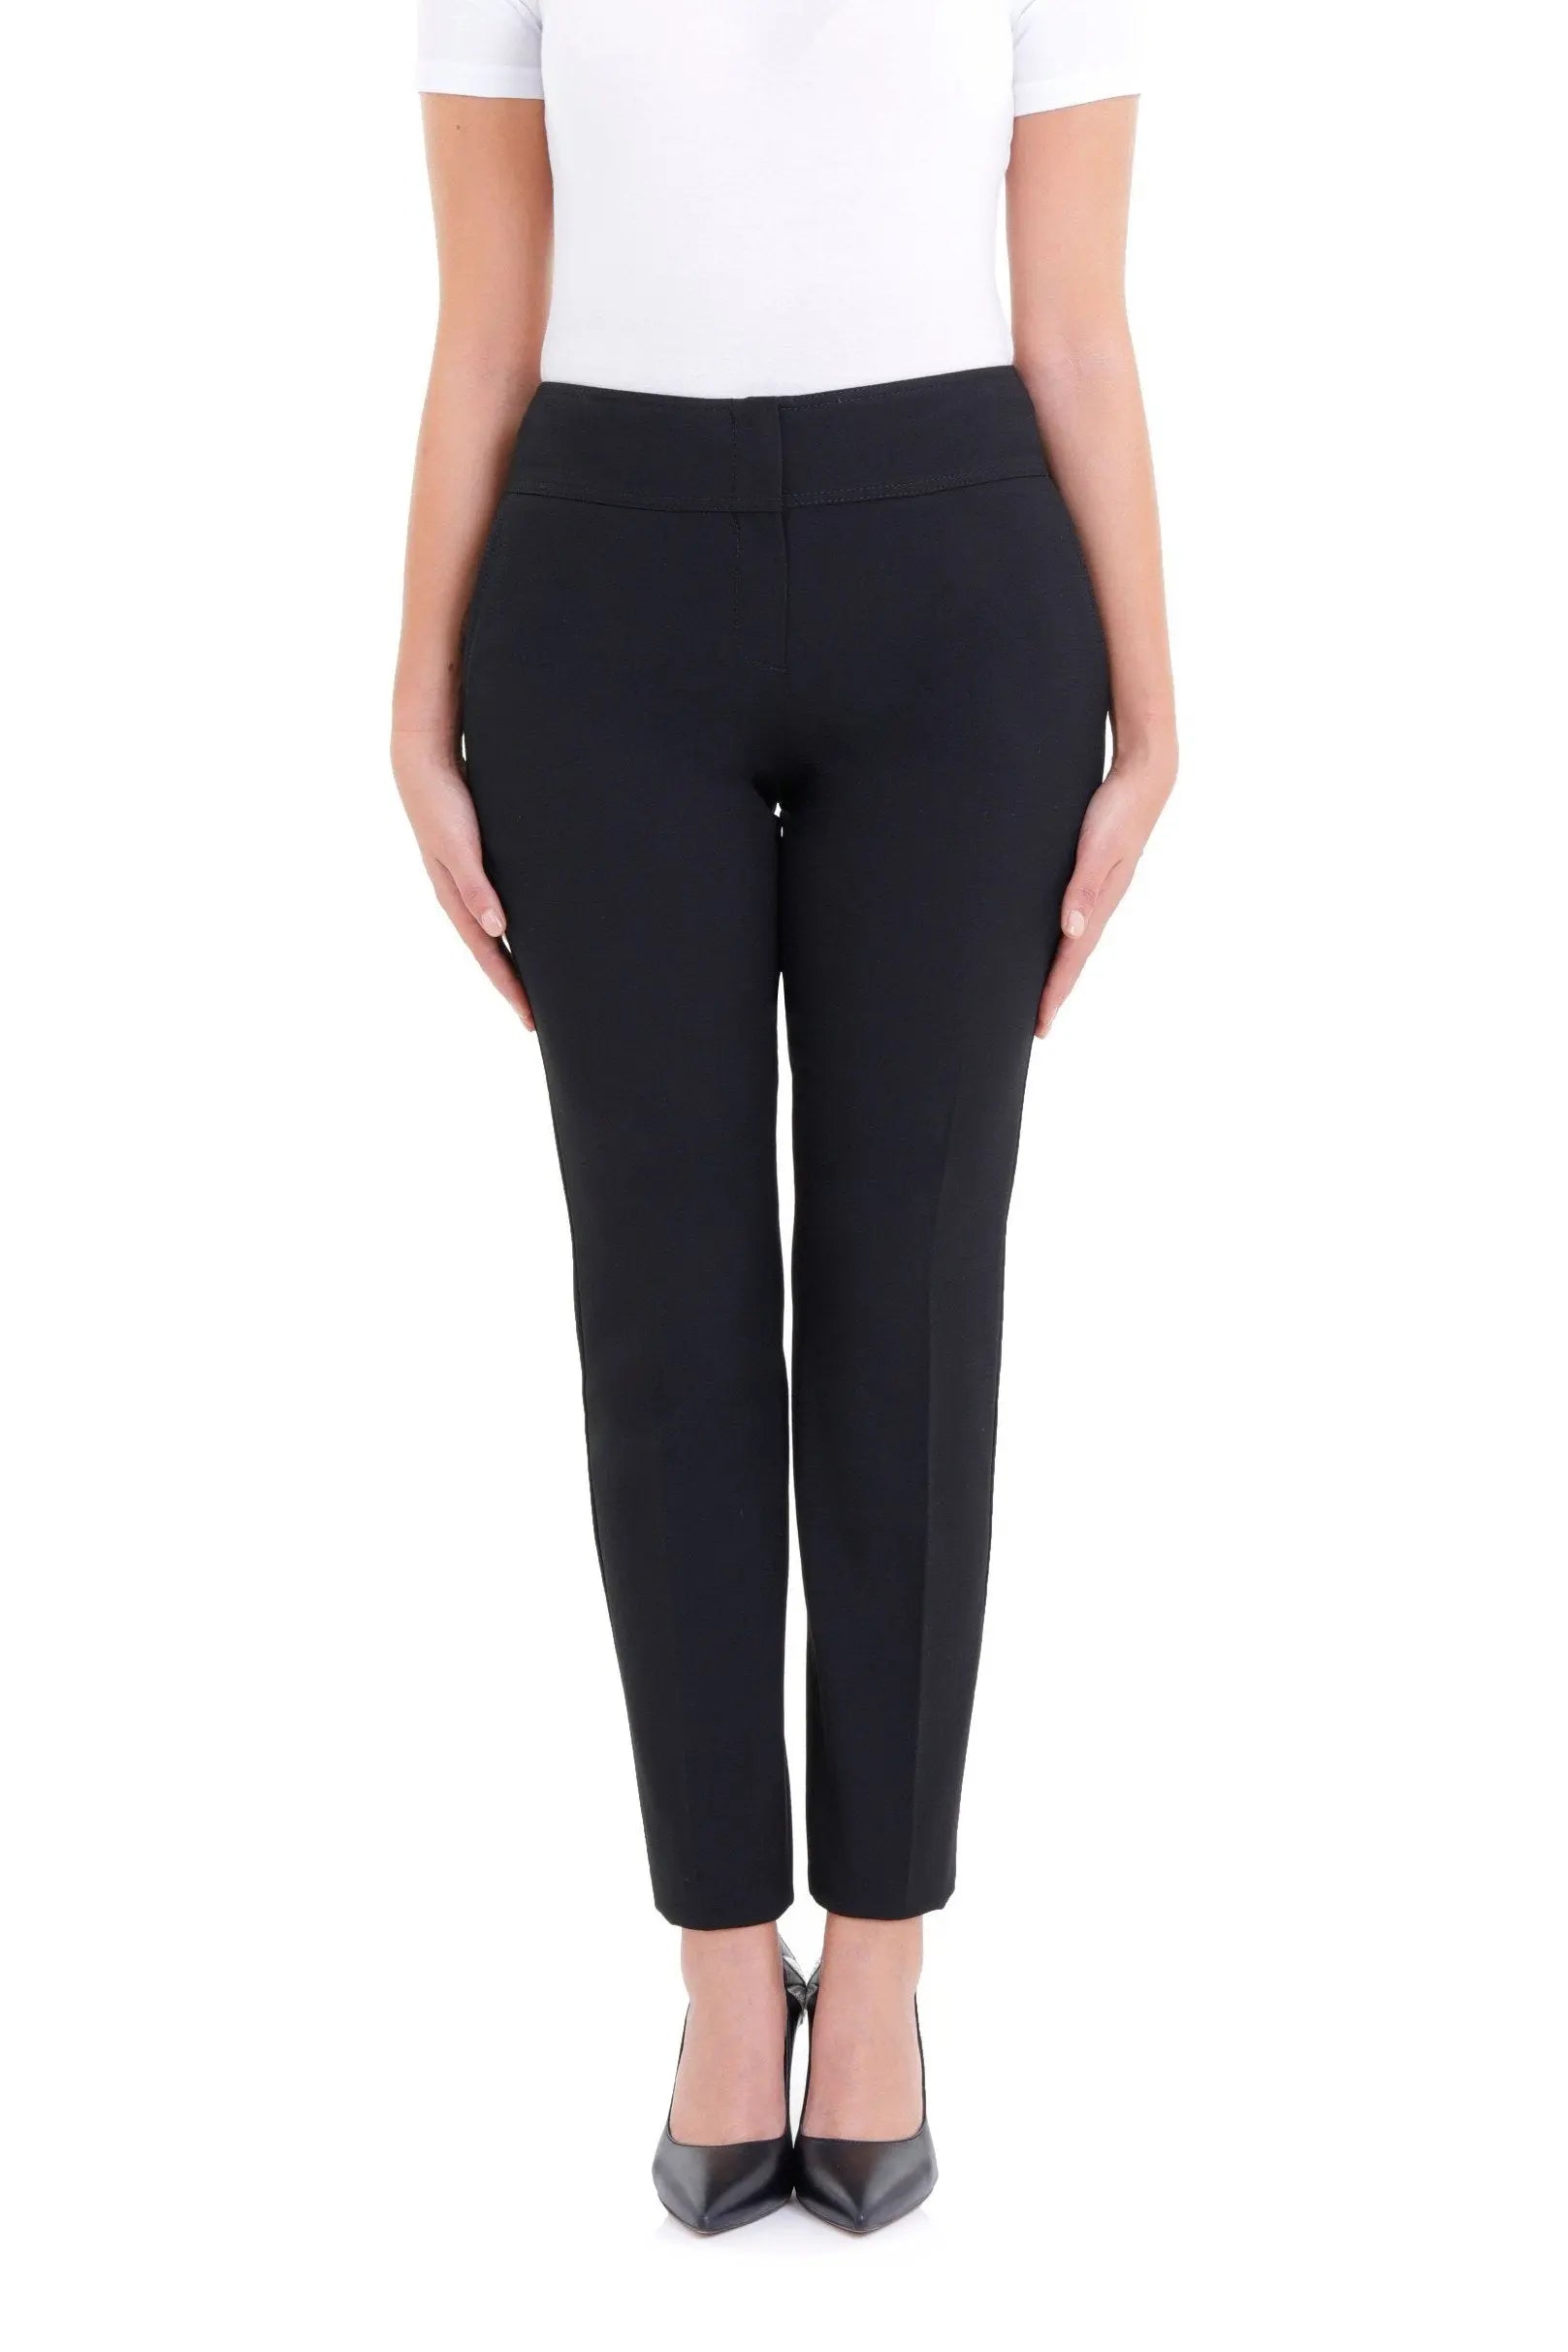 Cooper & Ella Women Black Dress Pants L | eBay